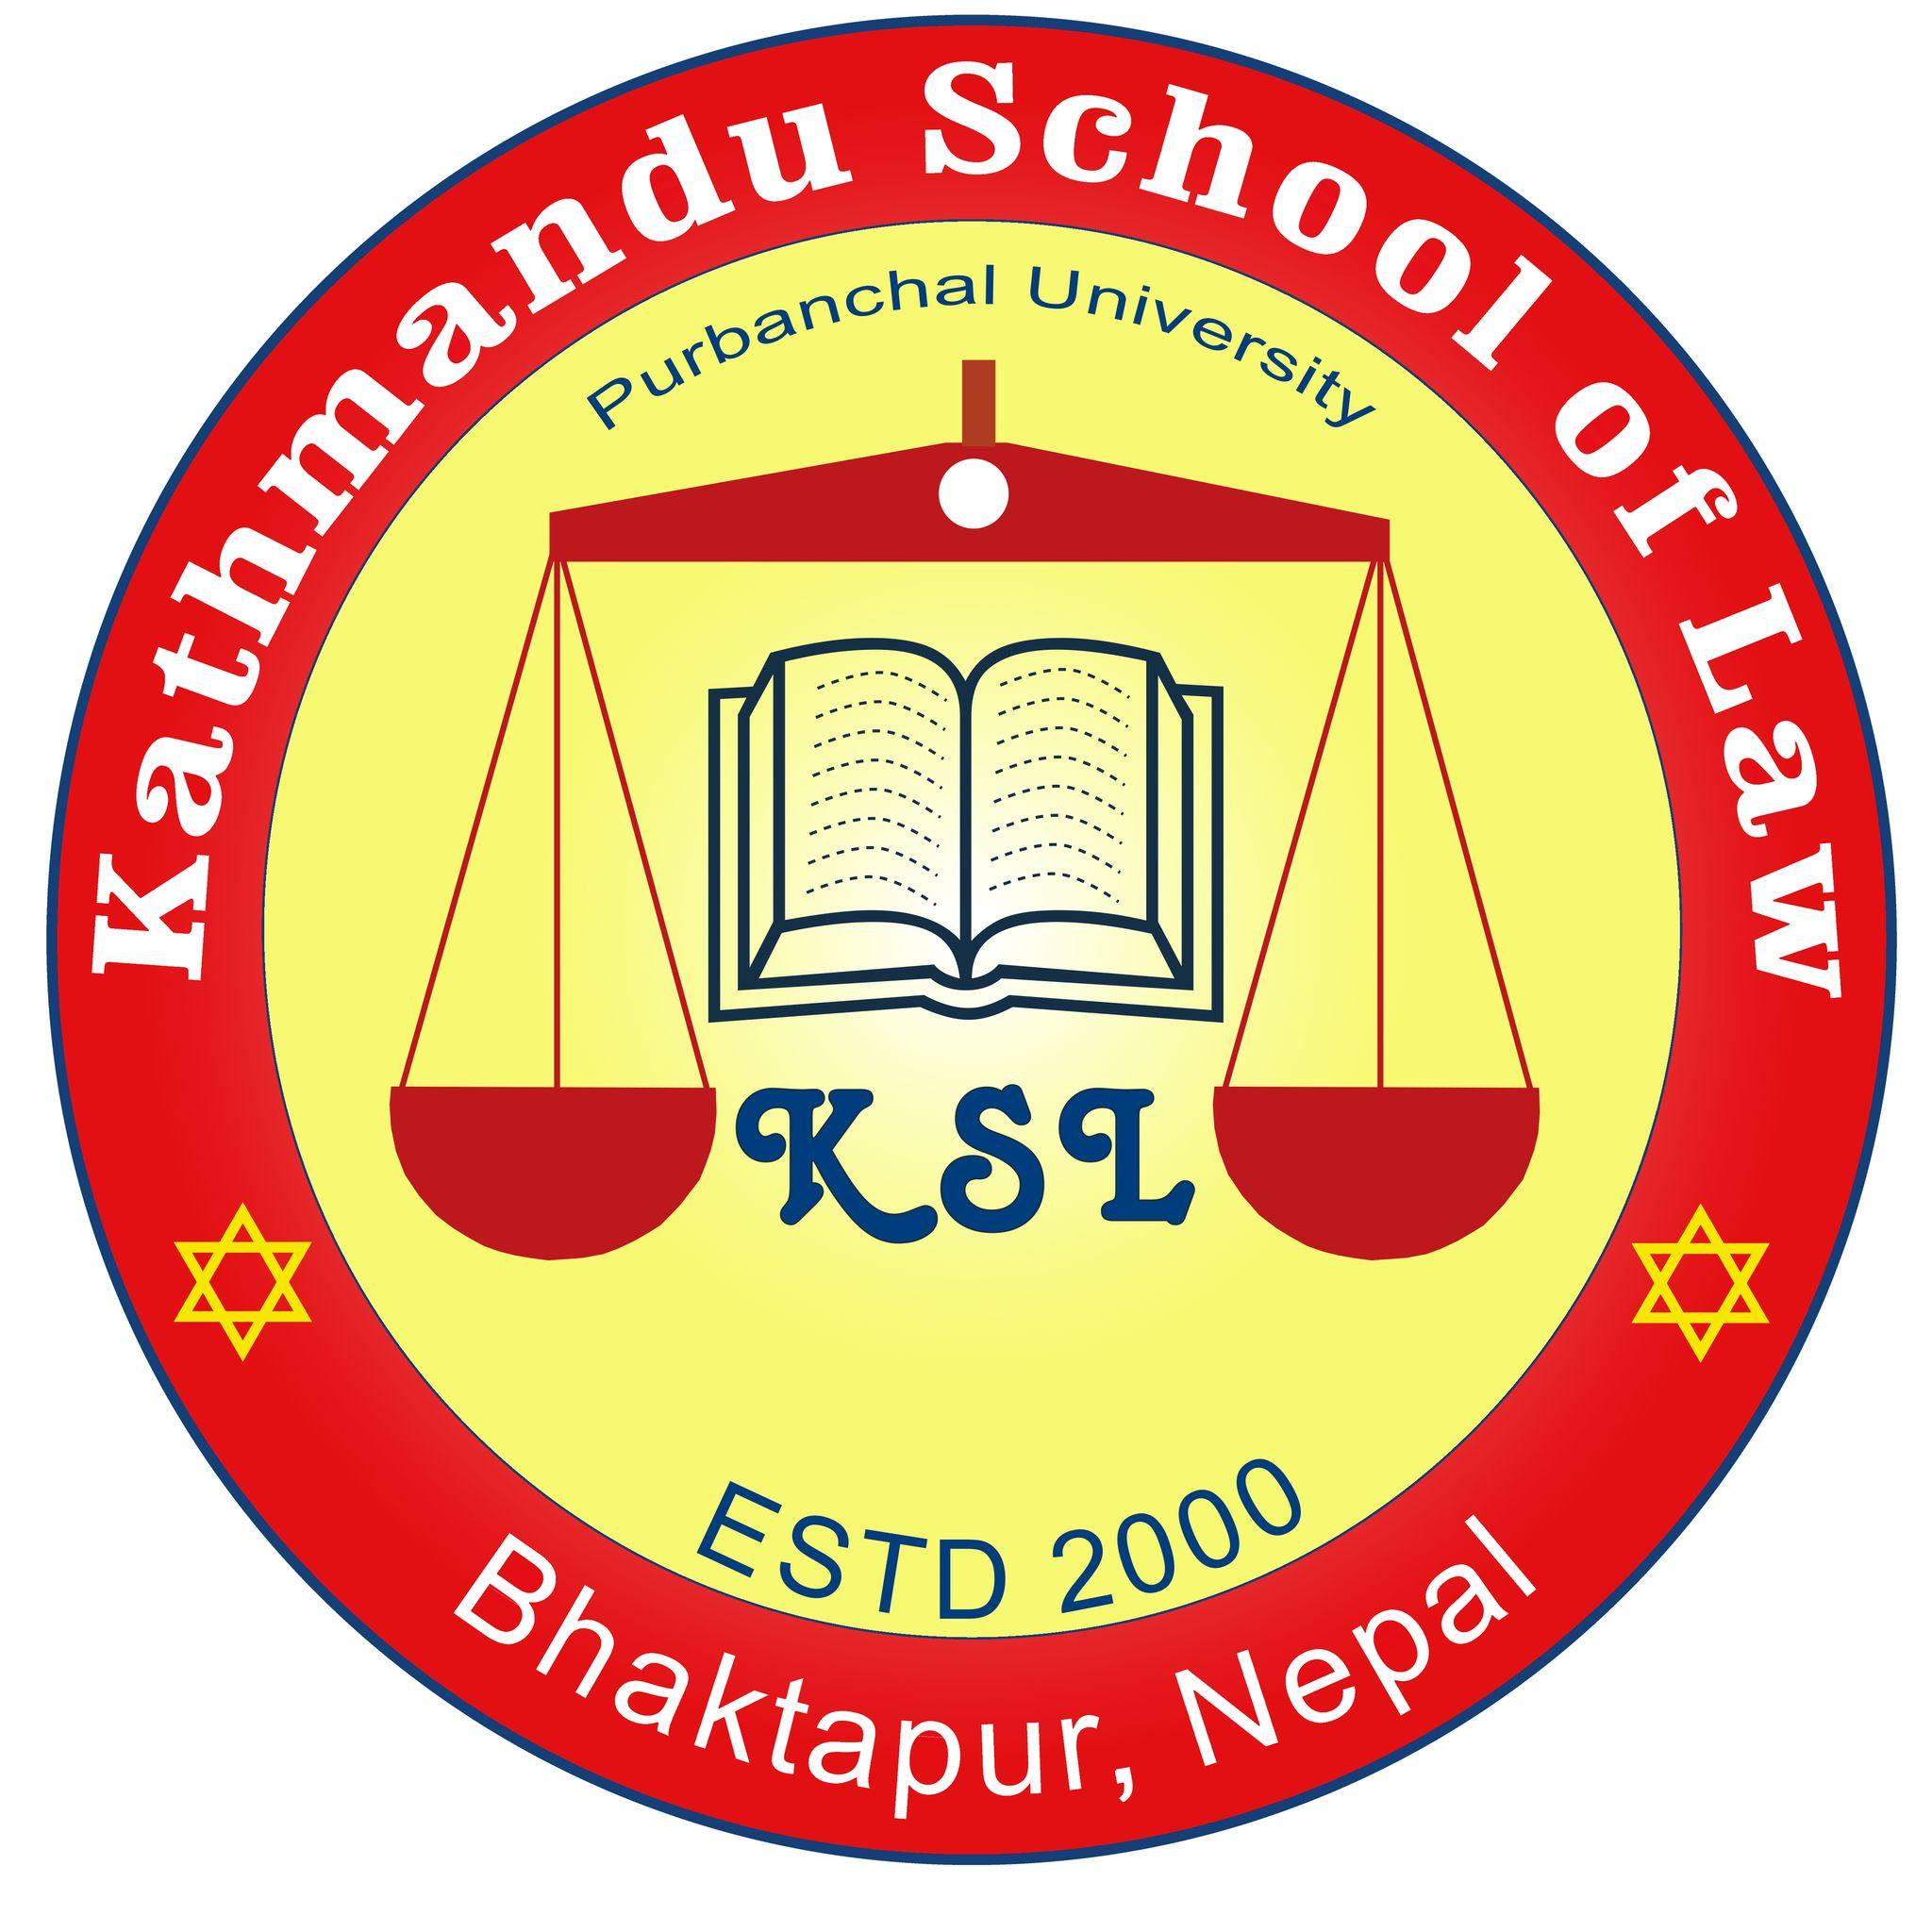 Kathmandu School of Law